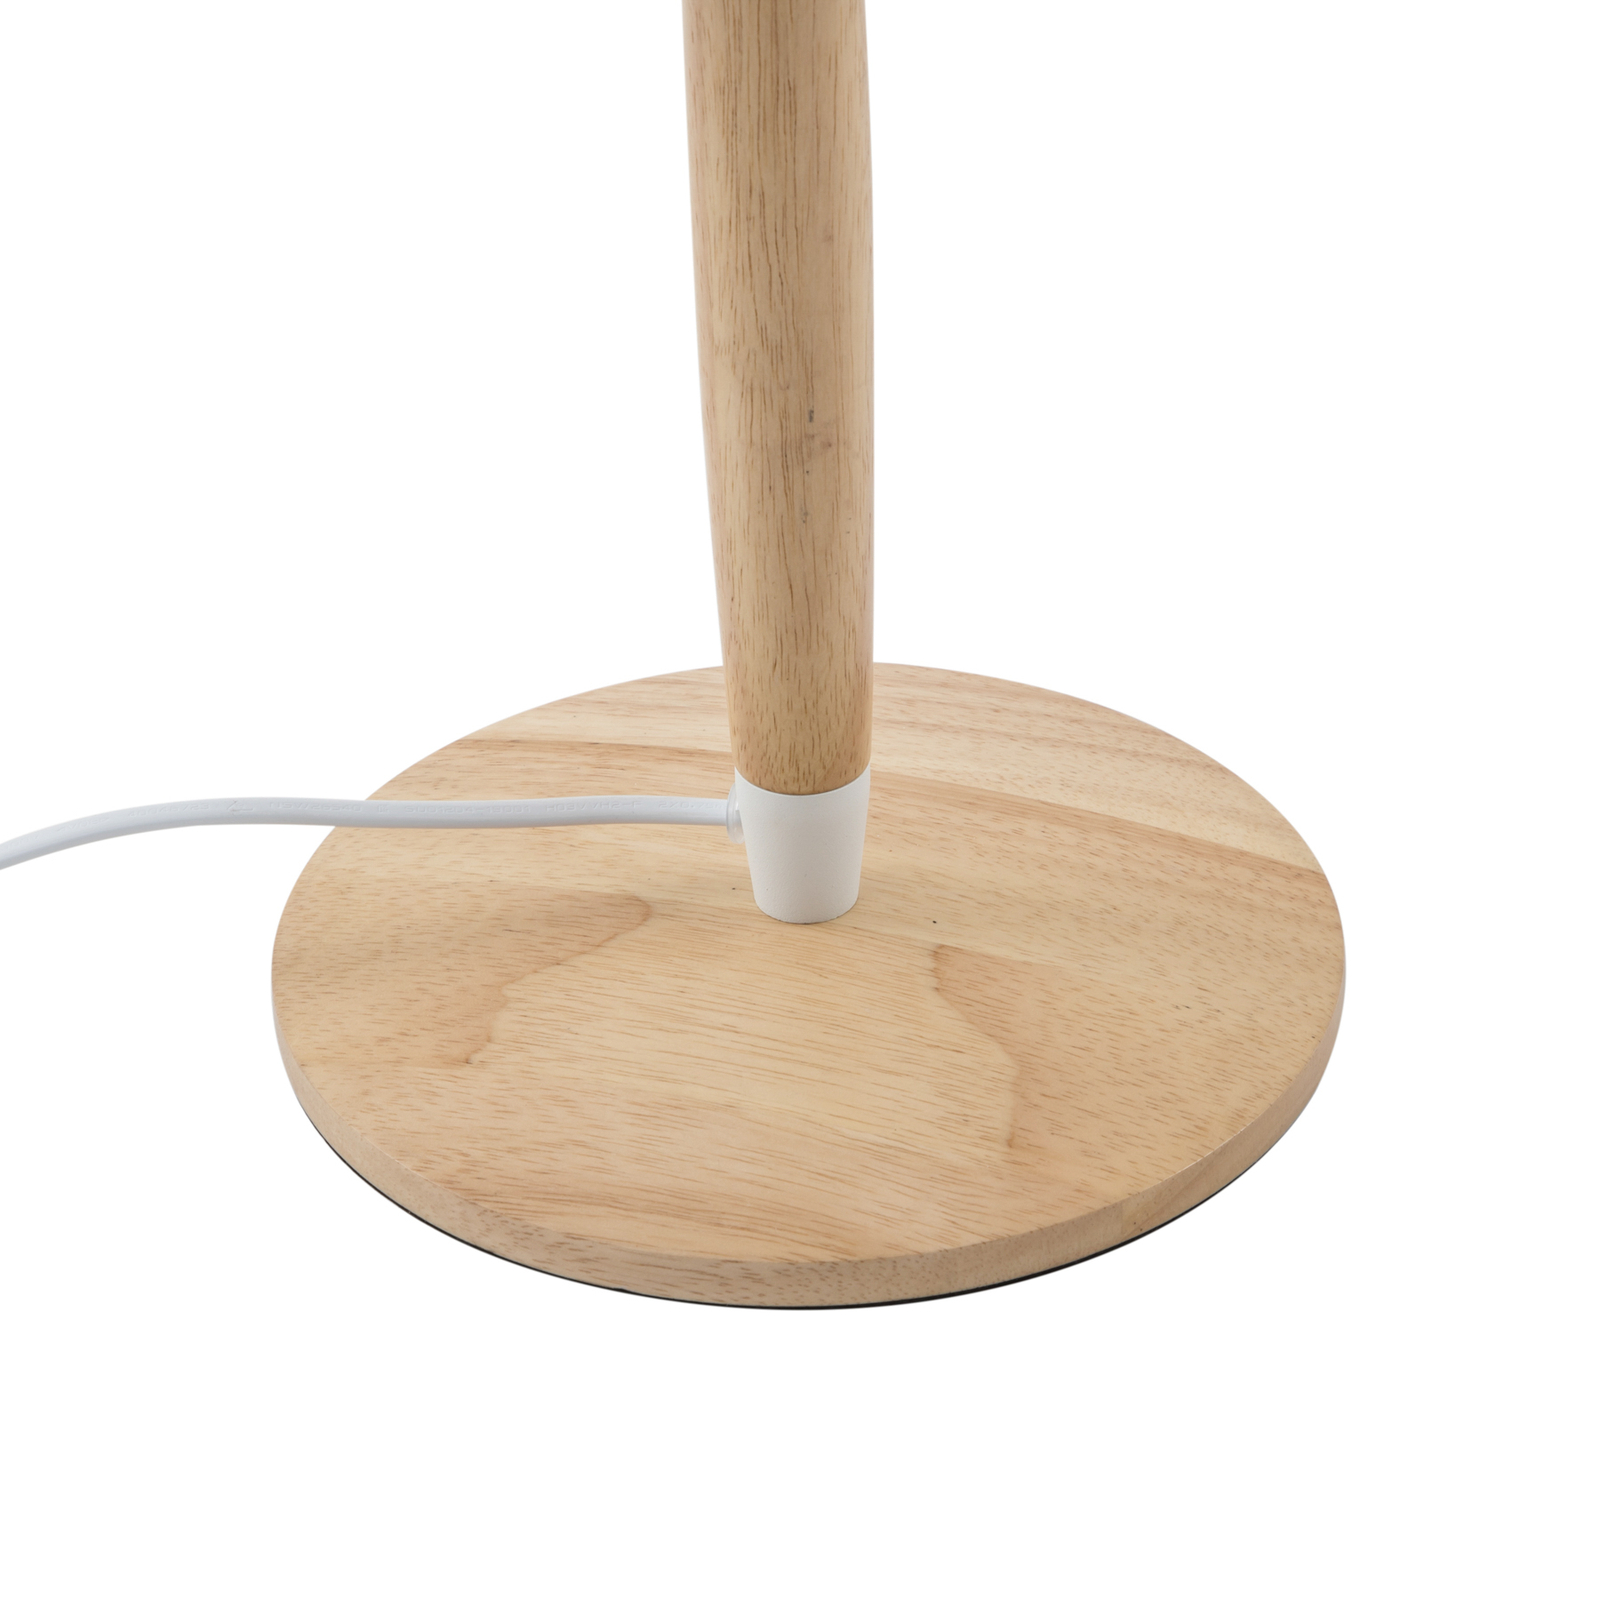 Lucande Ellorin tafellamp, wit, hout, Ø 37 cm, E27